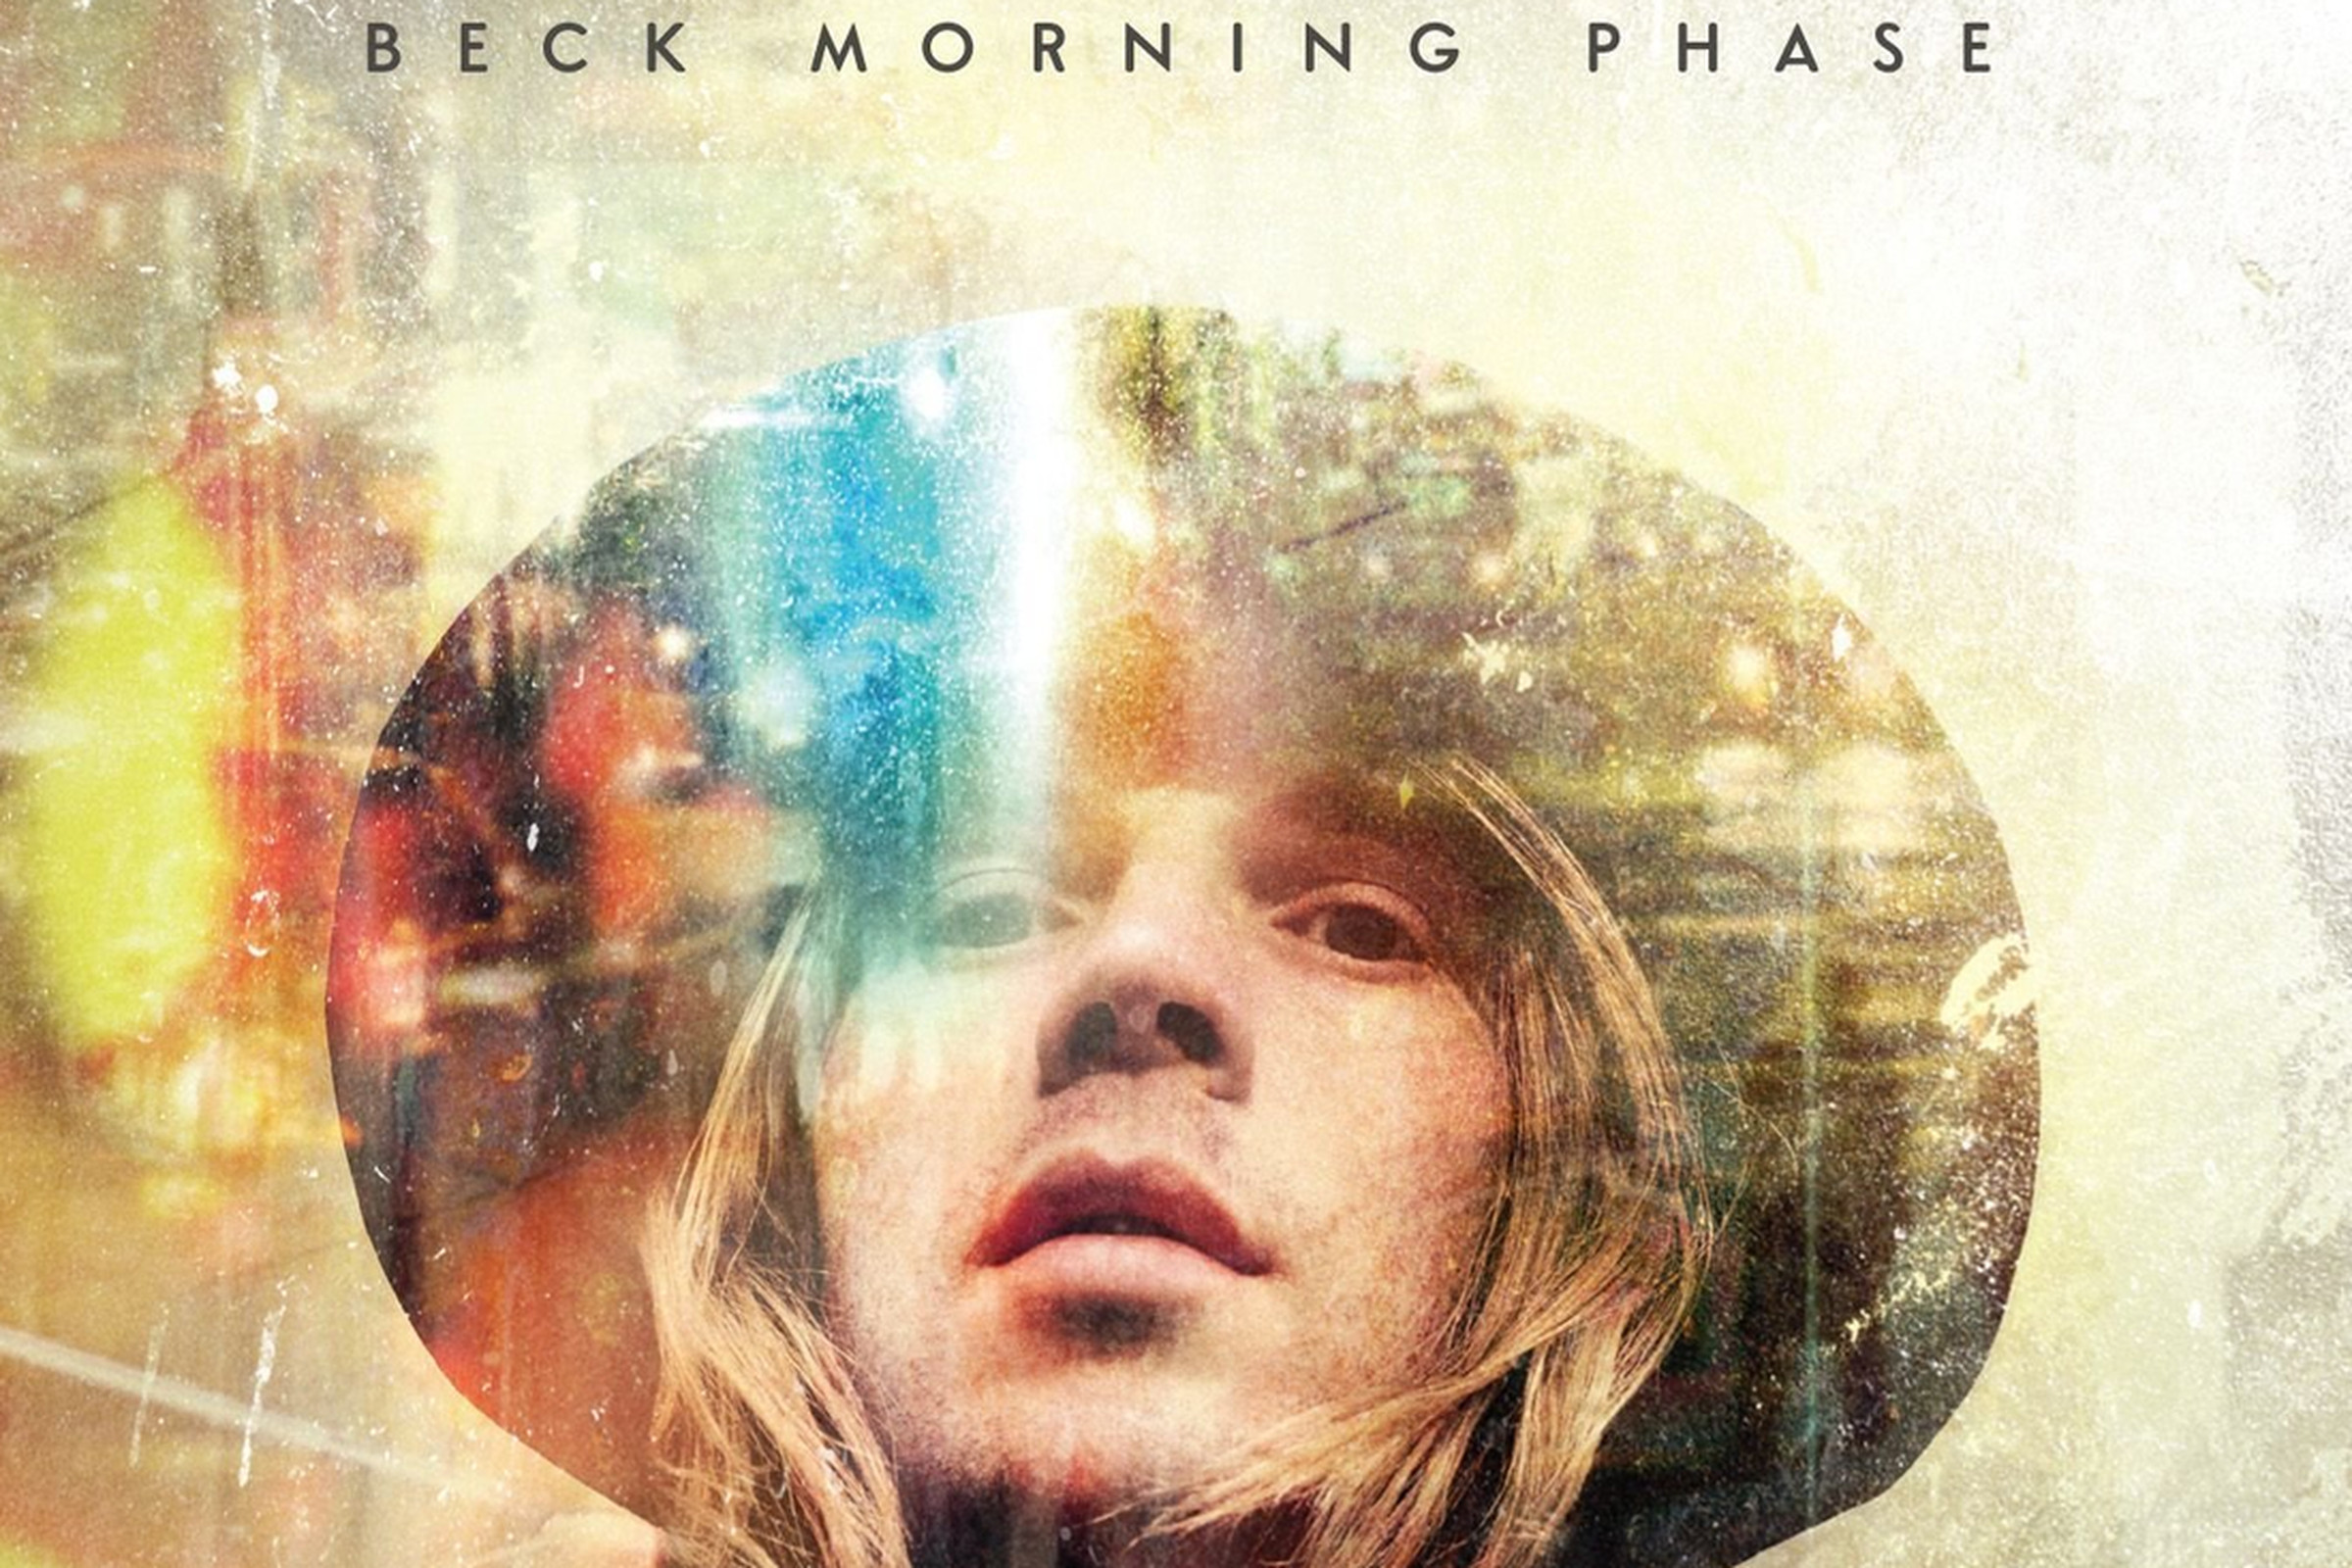 Beck Morning Phase